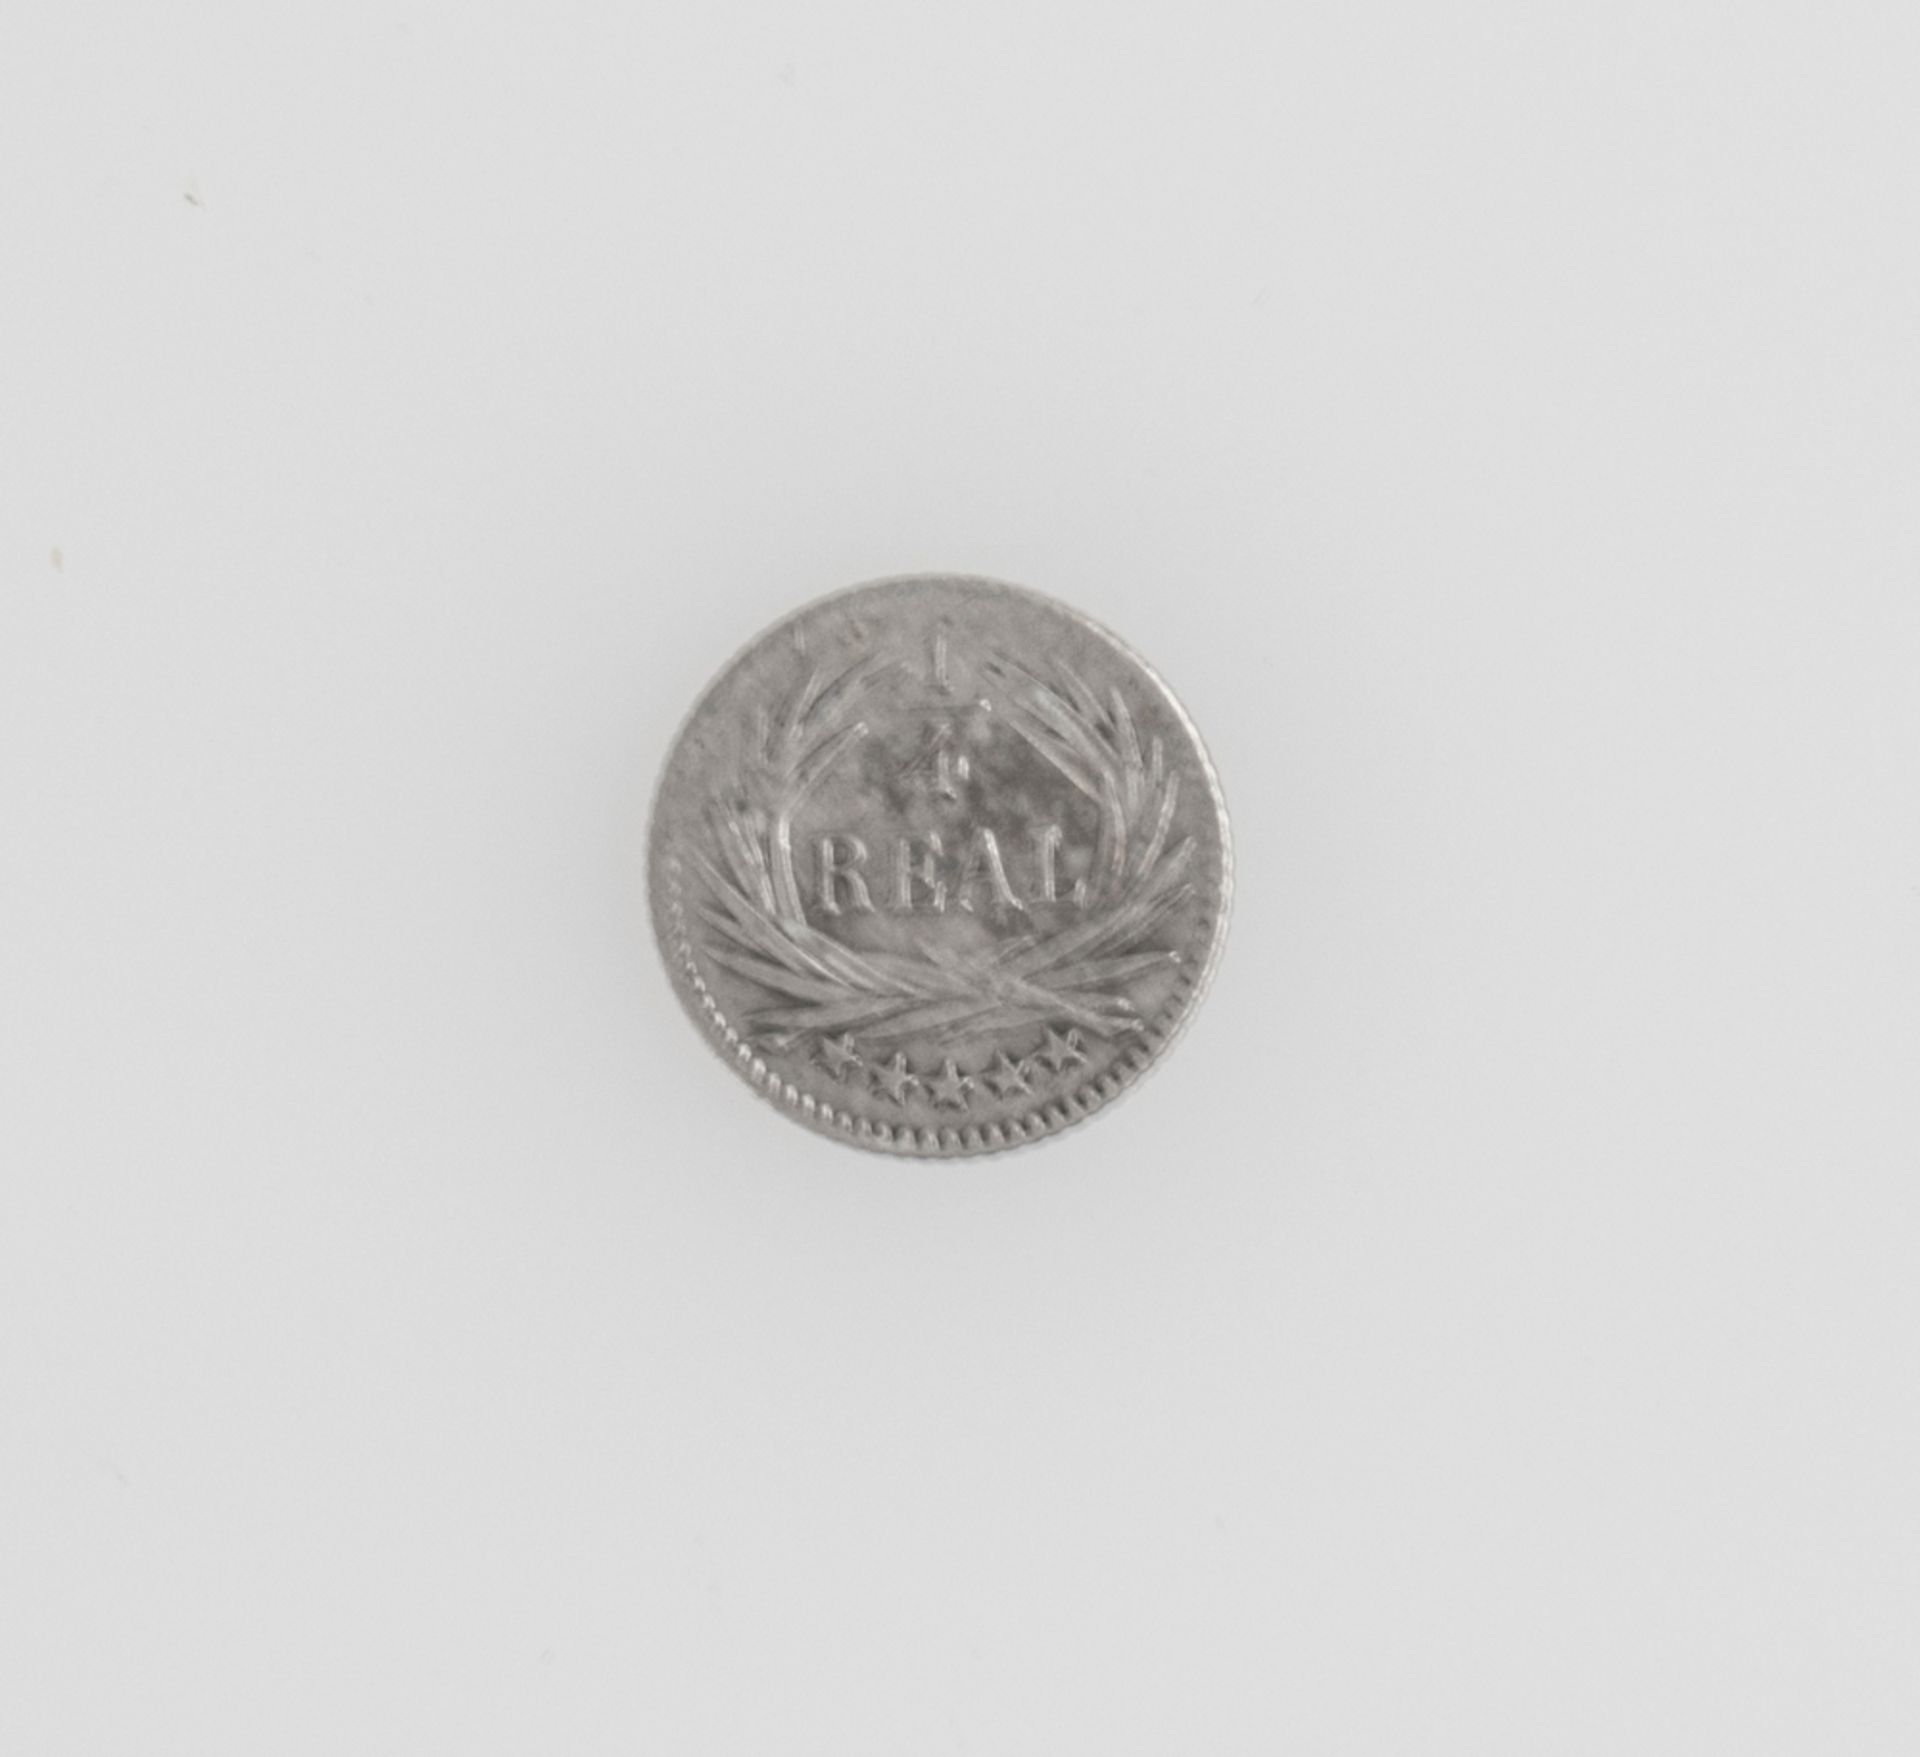 Guatemala 1895, 1/4 Real - Silbermünze. Erhaltung: ss. - Bild 2 aus 2